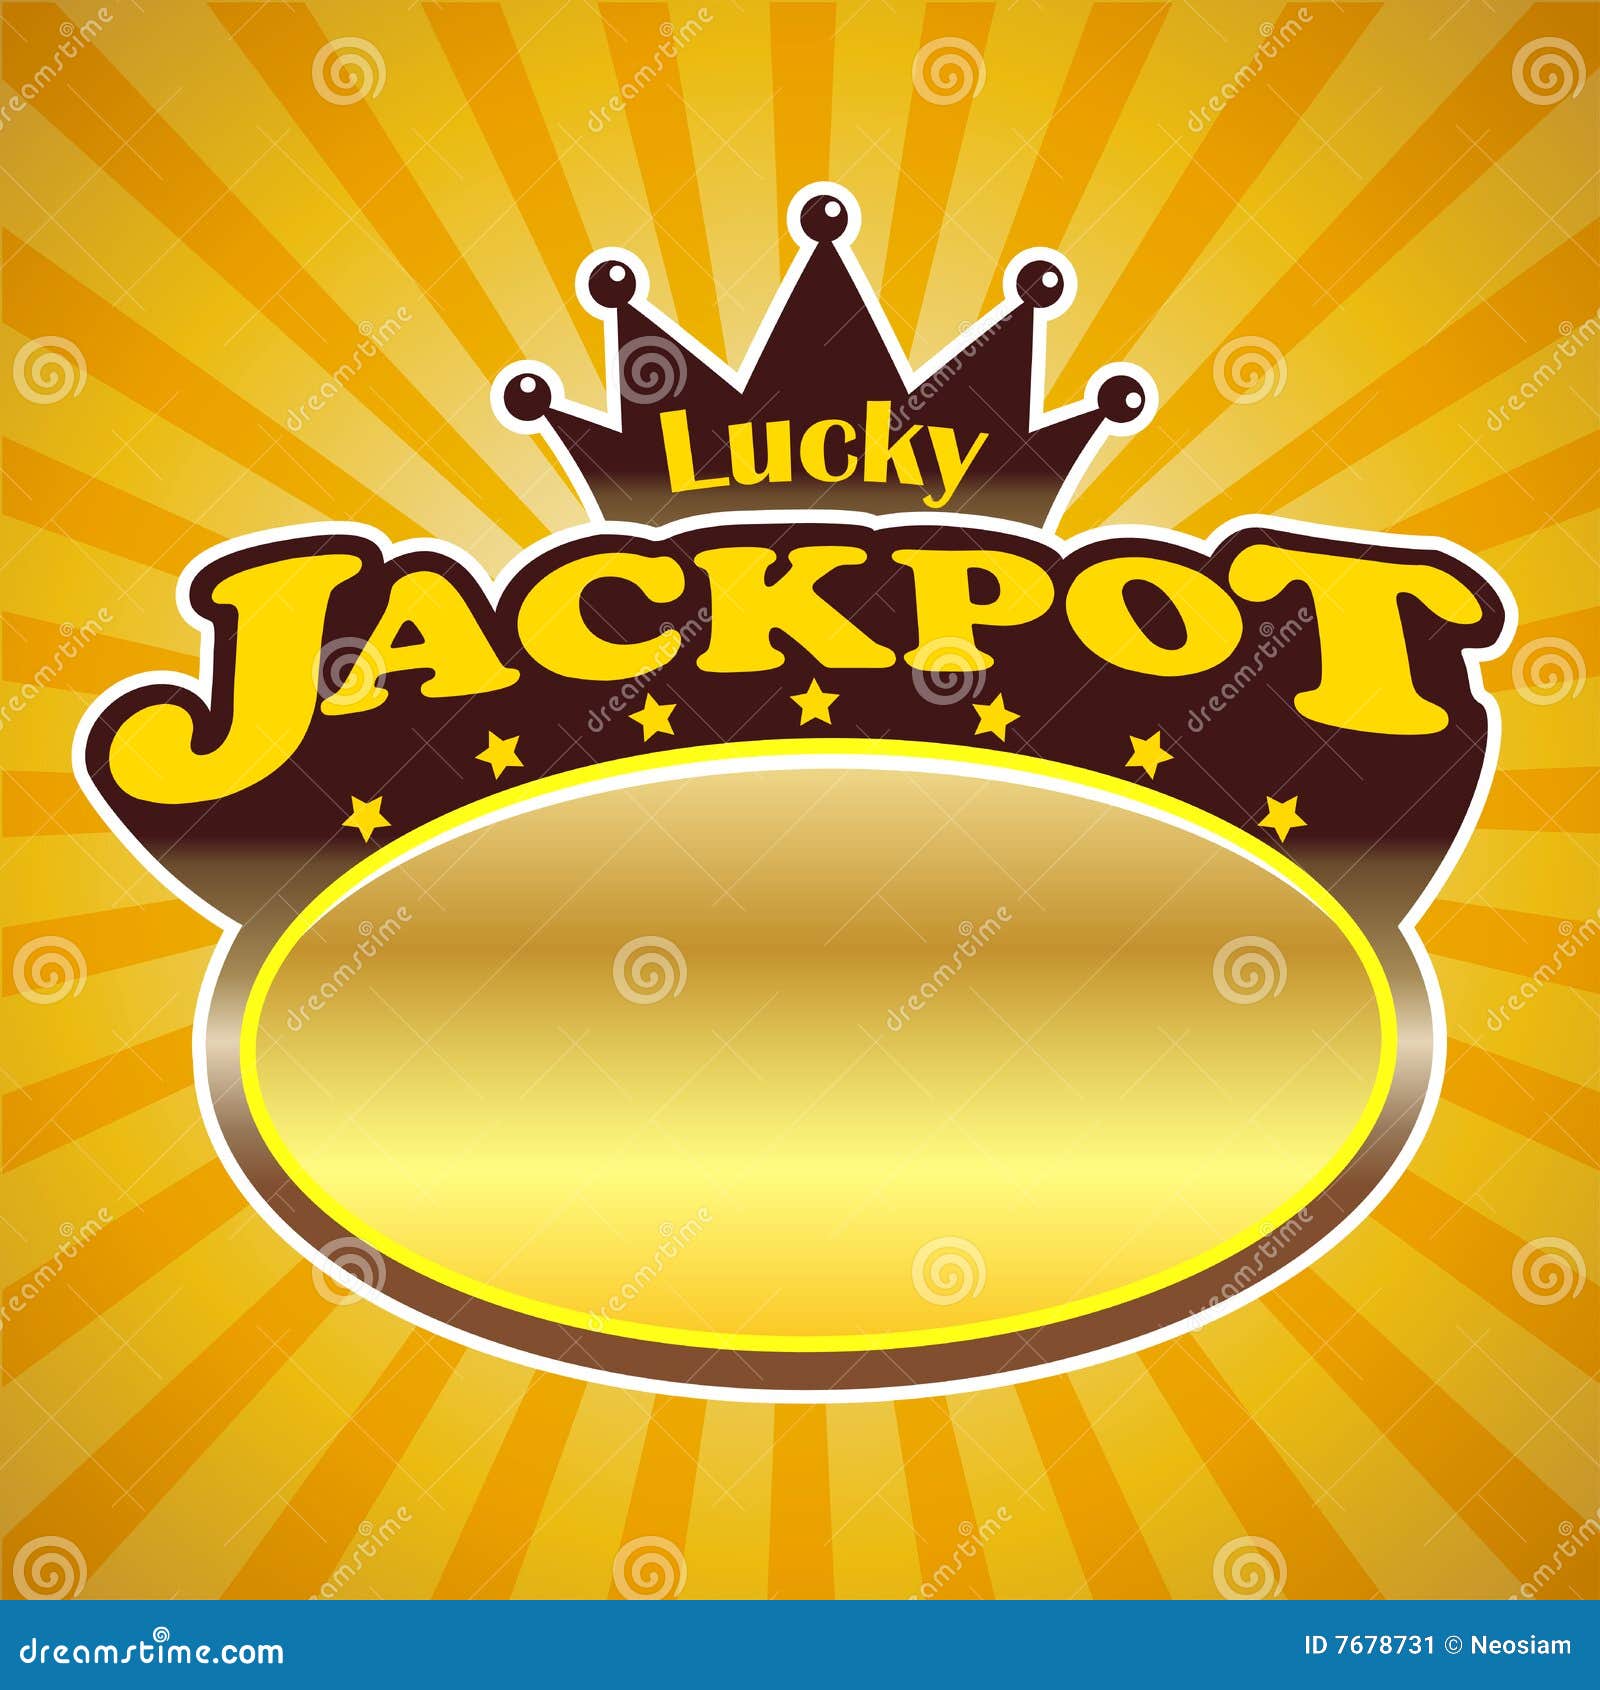 jackpot logo